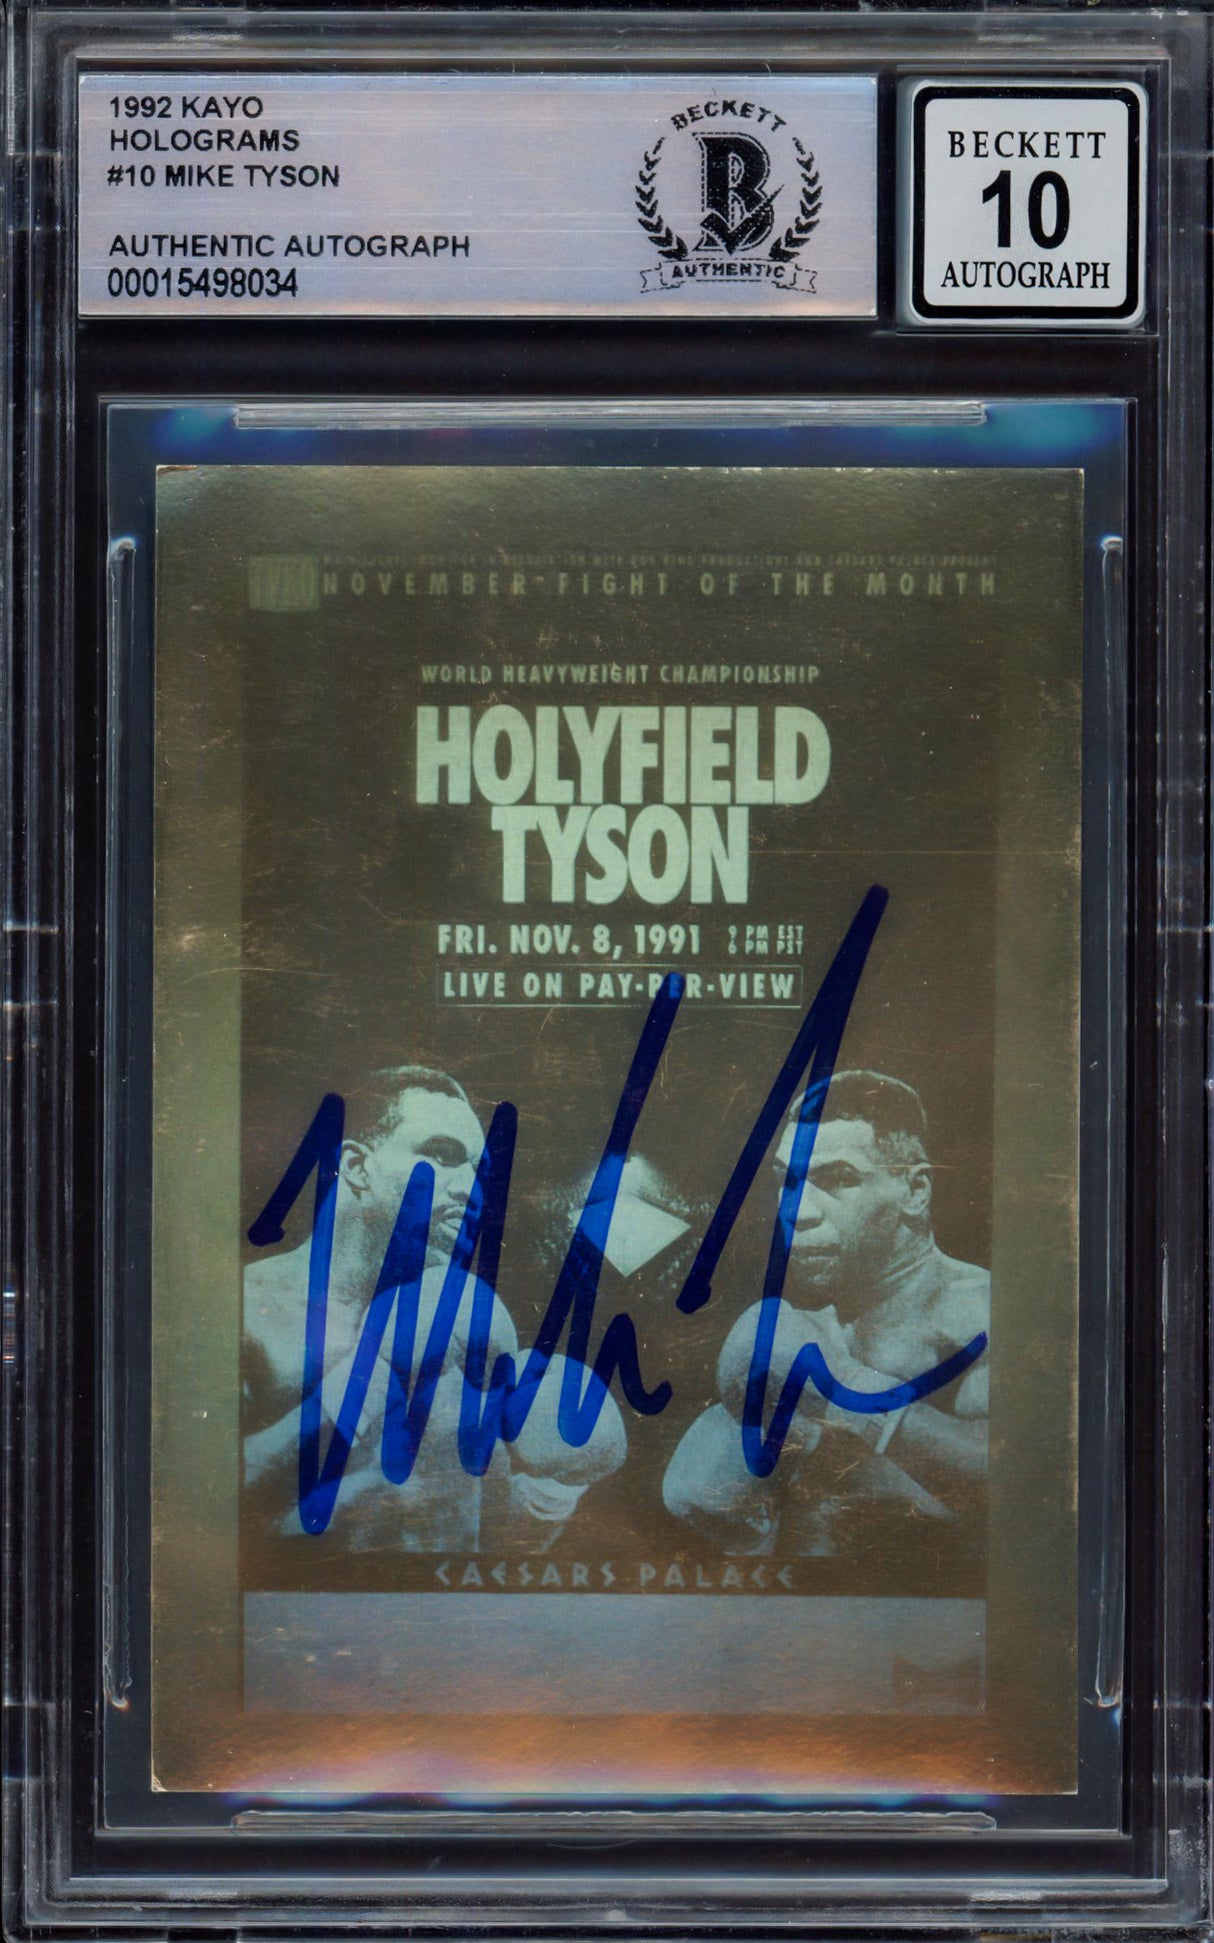 Mike Tyson Autographed 1991 Kayo Gold Hologram Holyfield Tyson Card #10 Auto Grade Gem Mint 10 Beckett BAS #15498034